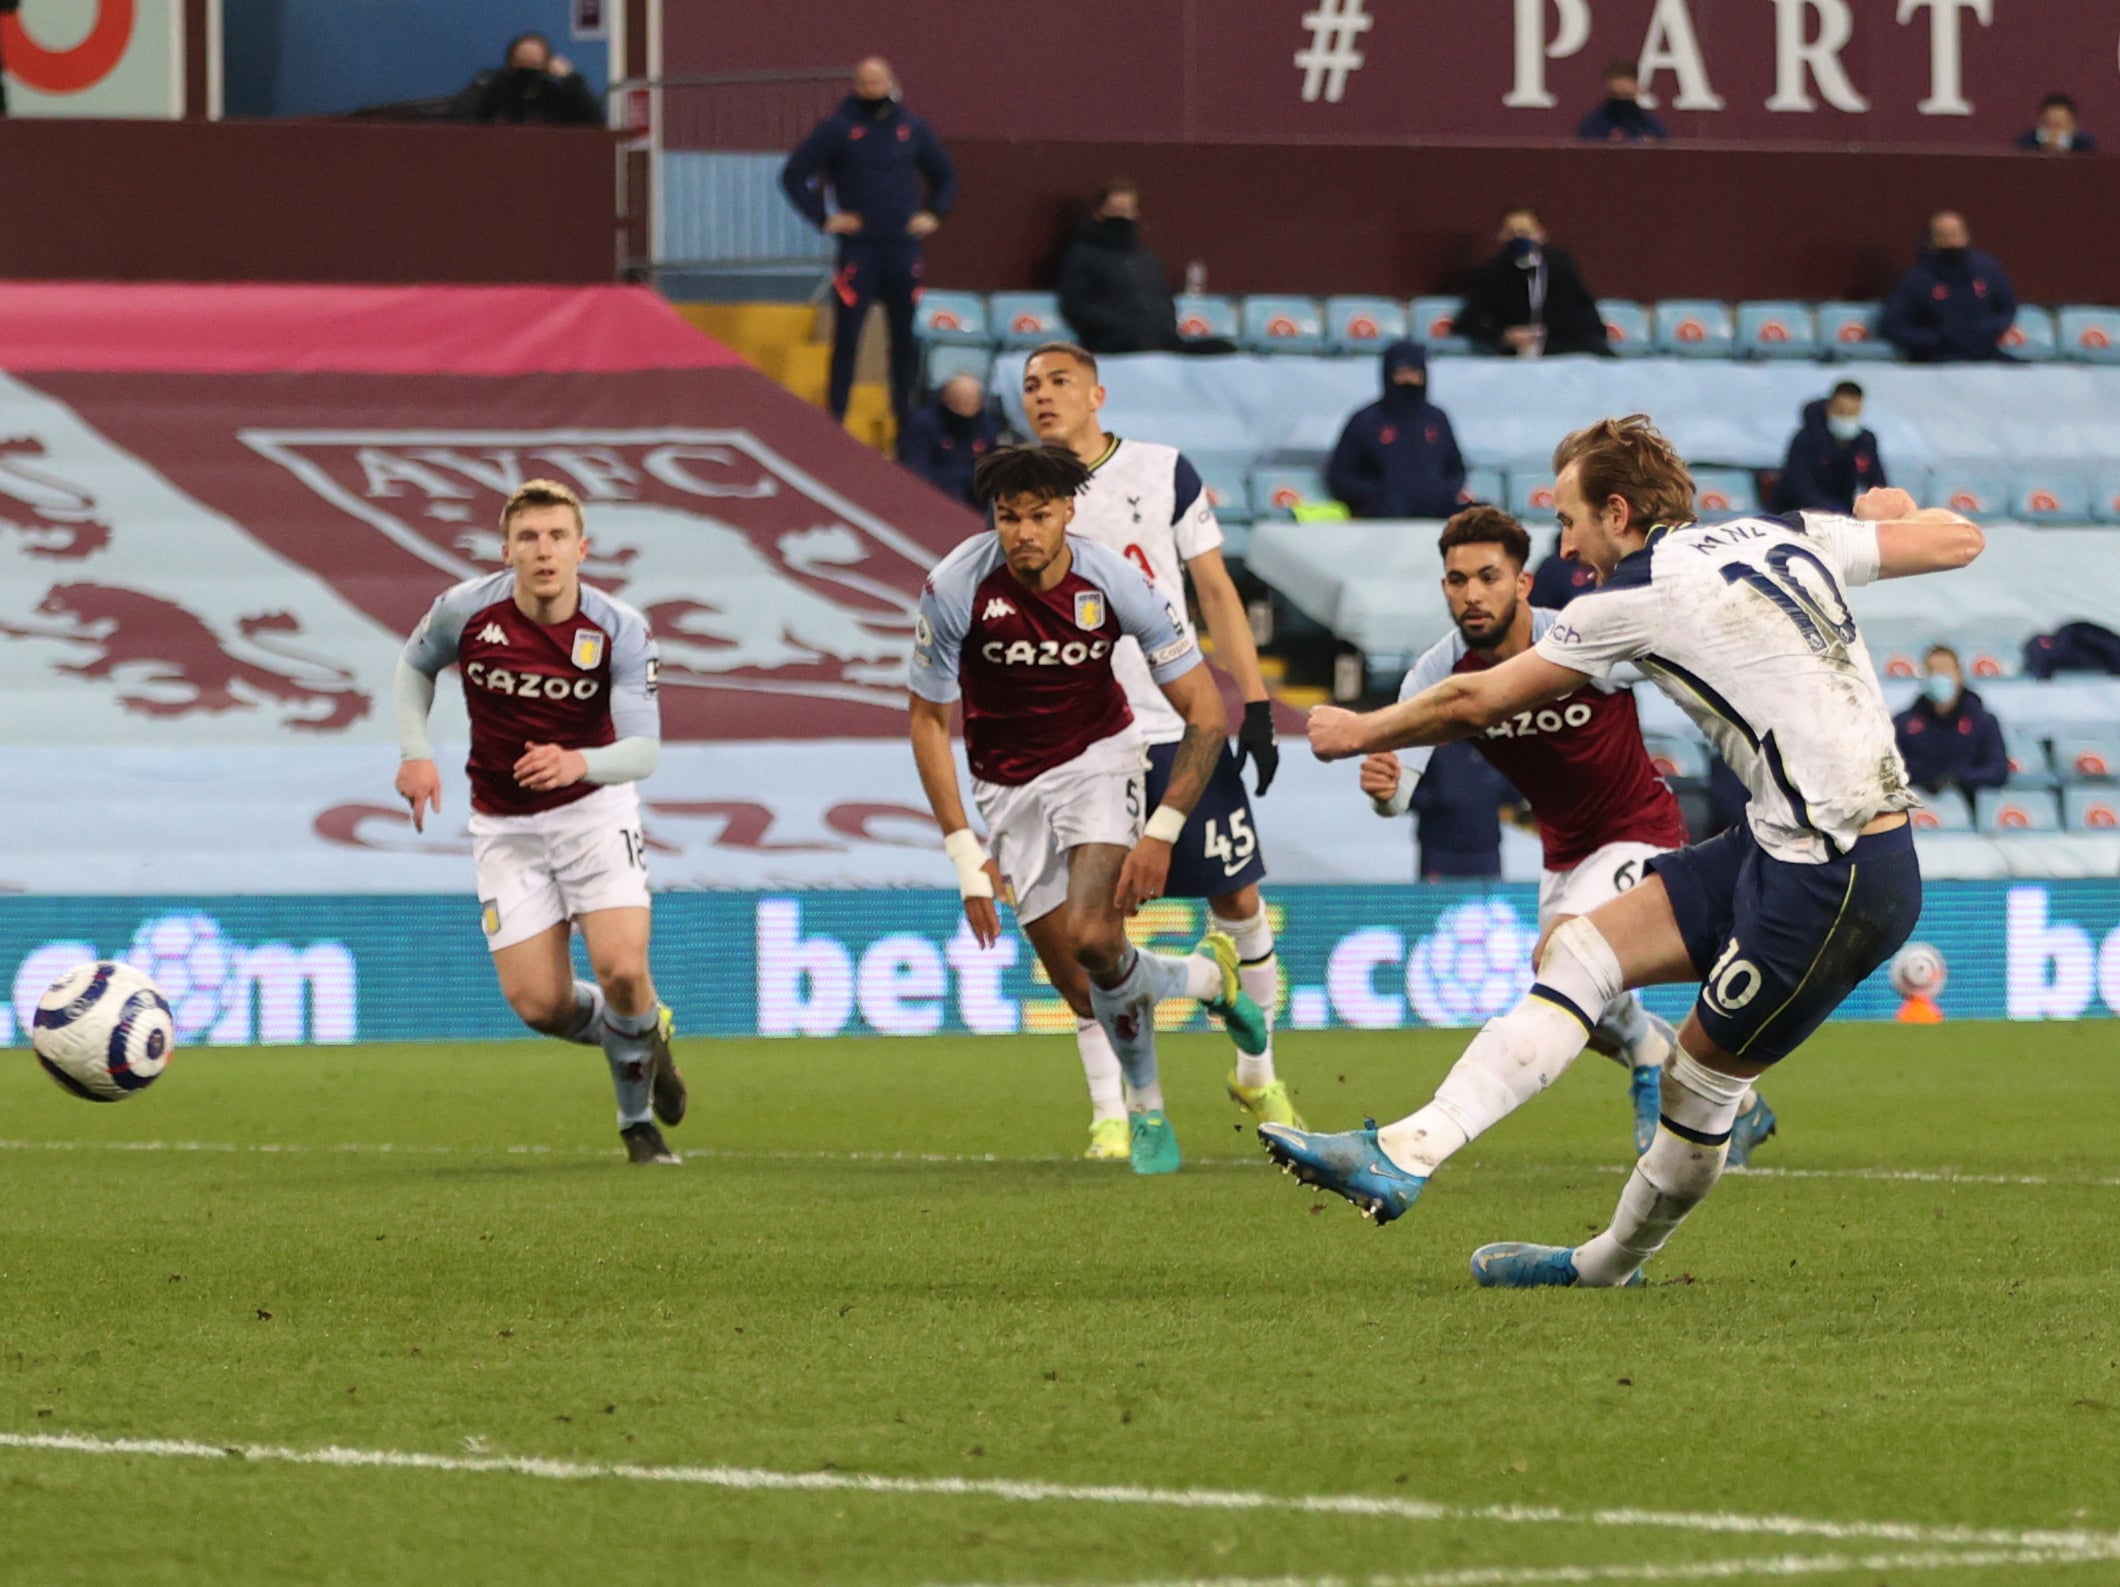 Harry Kane doubled Tottenham’s lead from the penalty spot